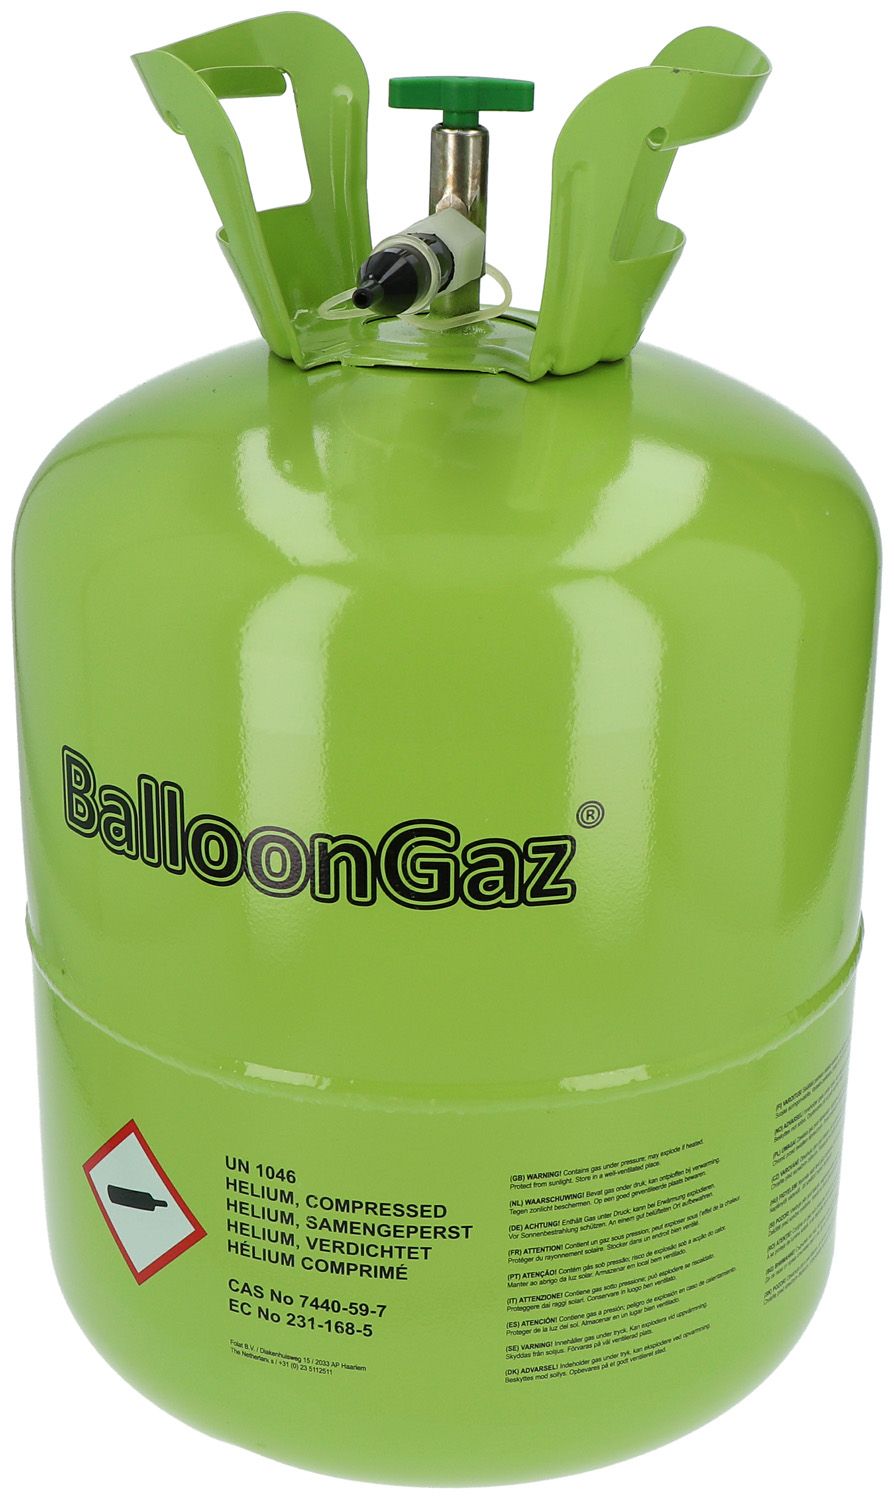 Helium gastank 50 ballonnen